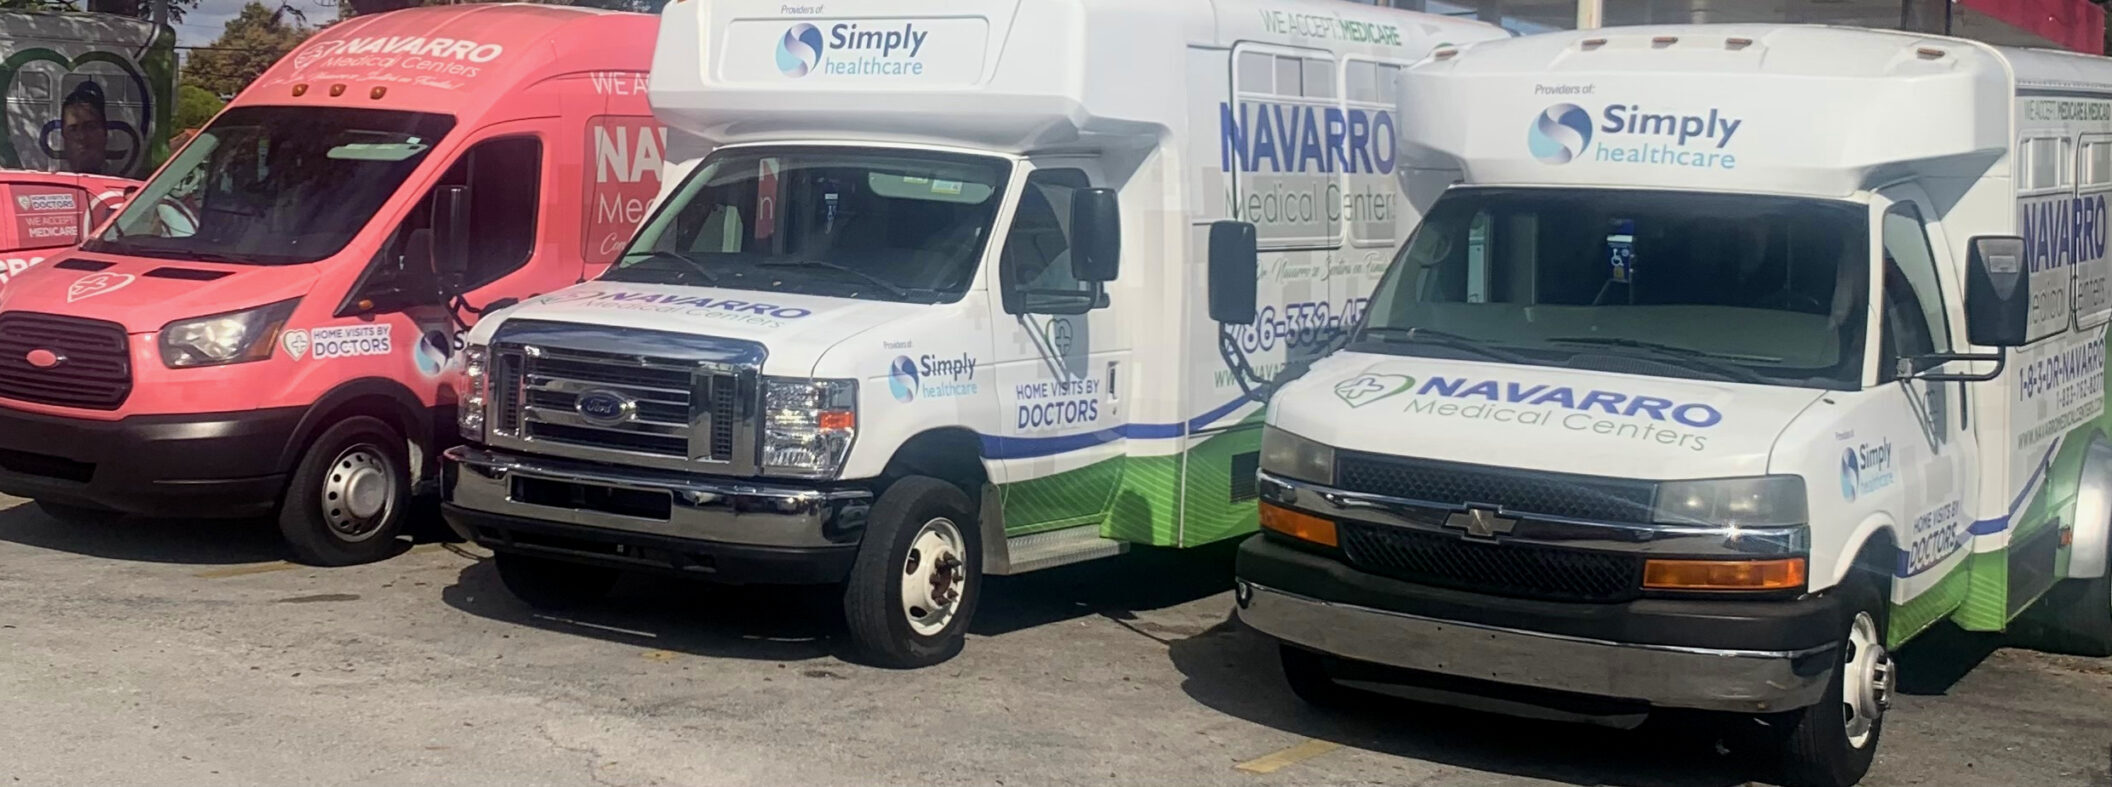 Navarro Medical Centers Fleet